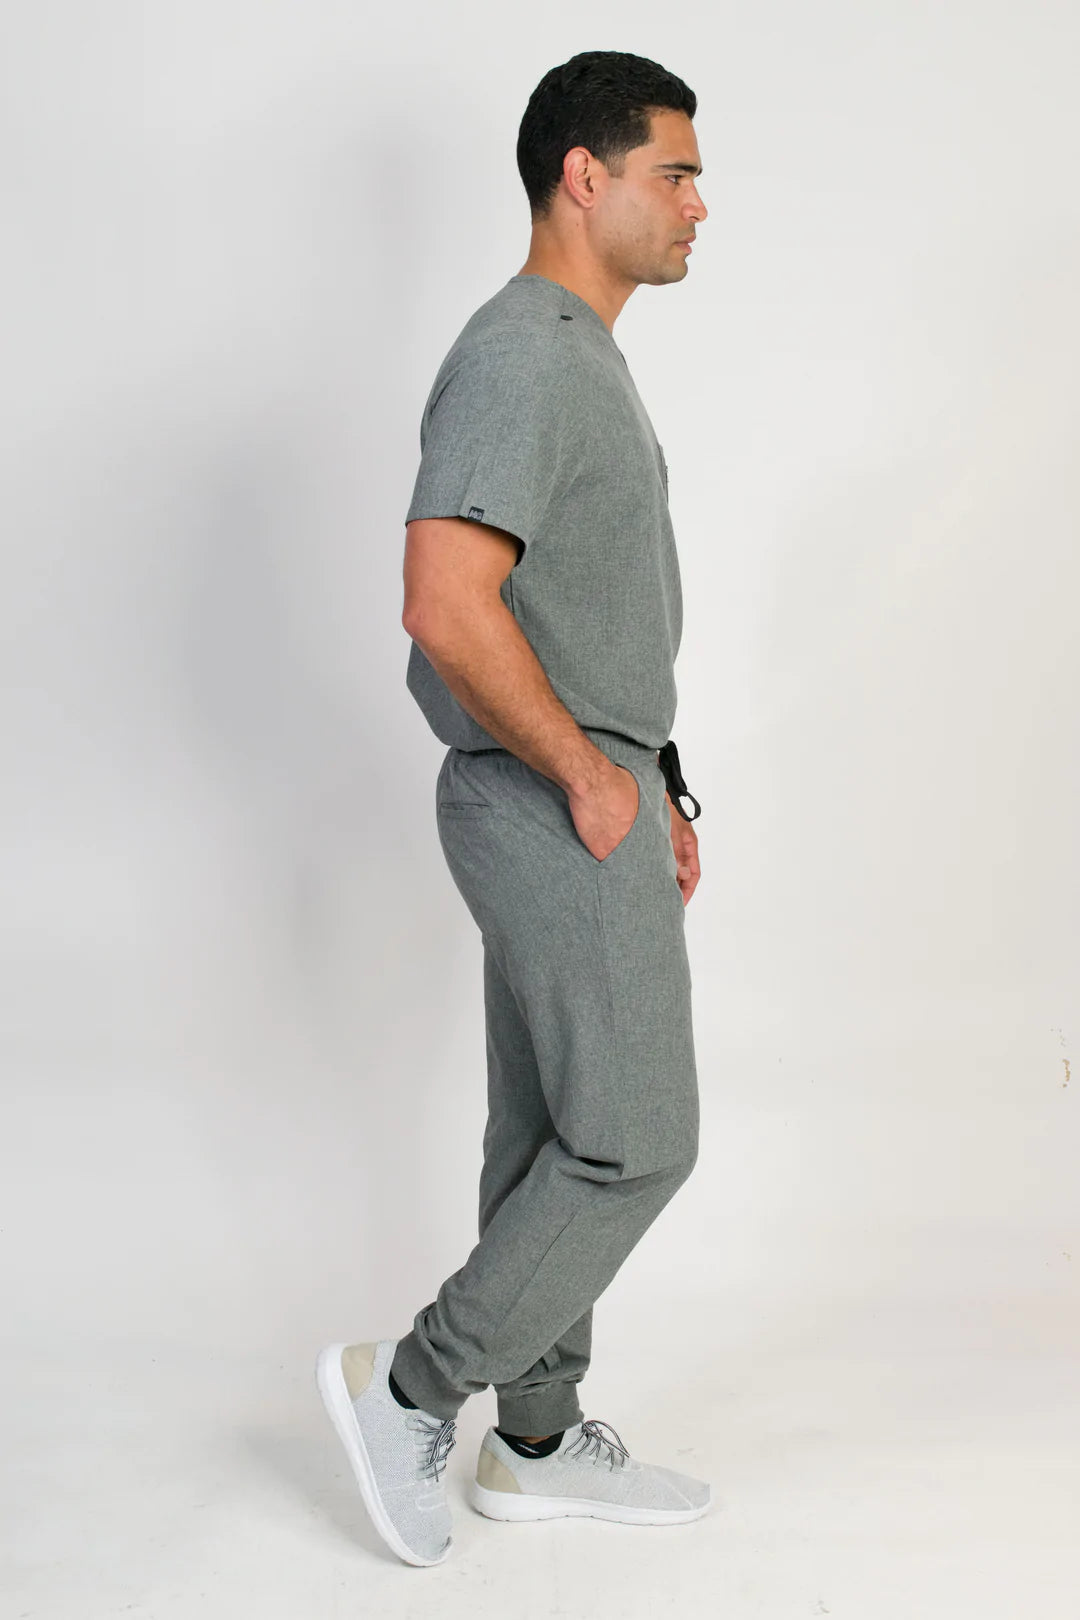 Medgear Women's 12-Pocket Athletic Slim Fit Scrubs Set with Zipper